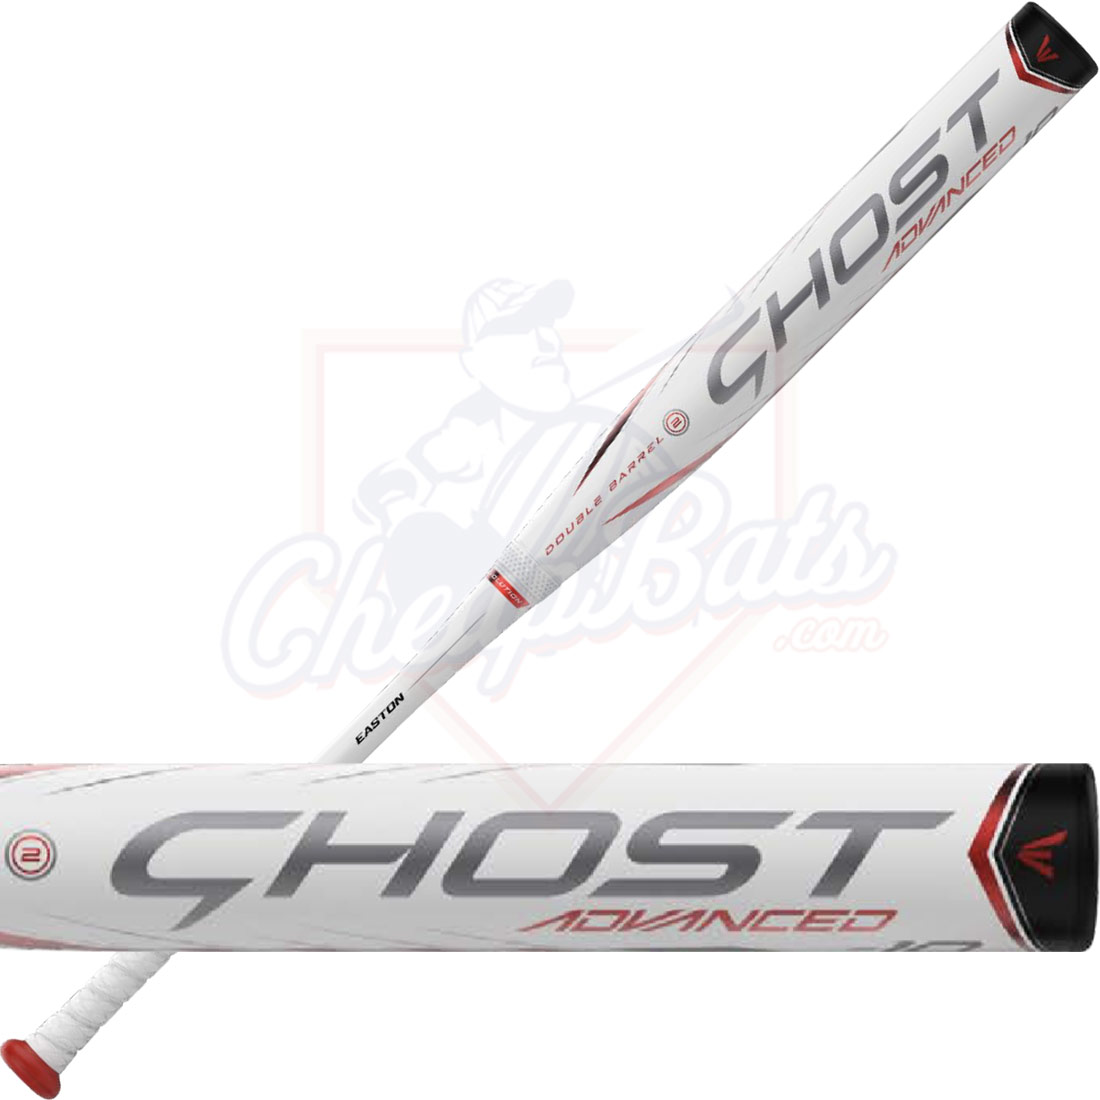 Fastpitch Softball Bats - Free Shipping & Returns